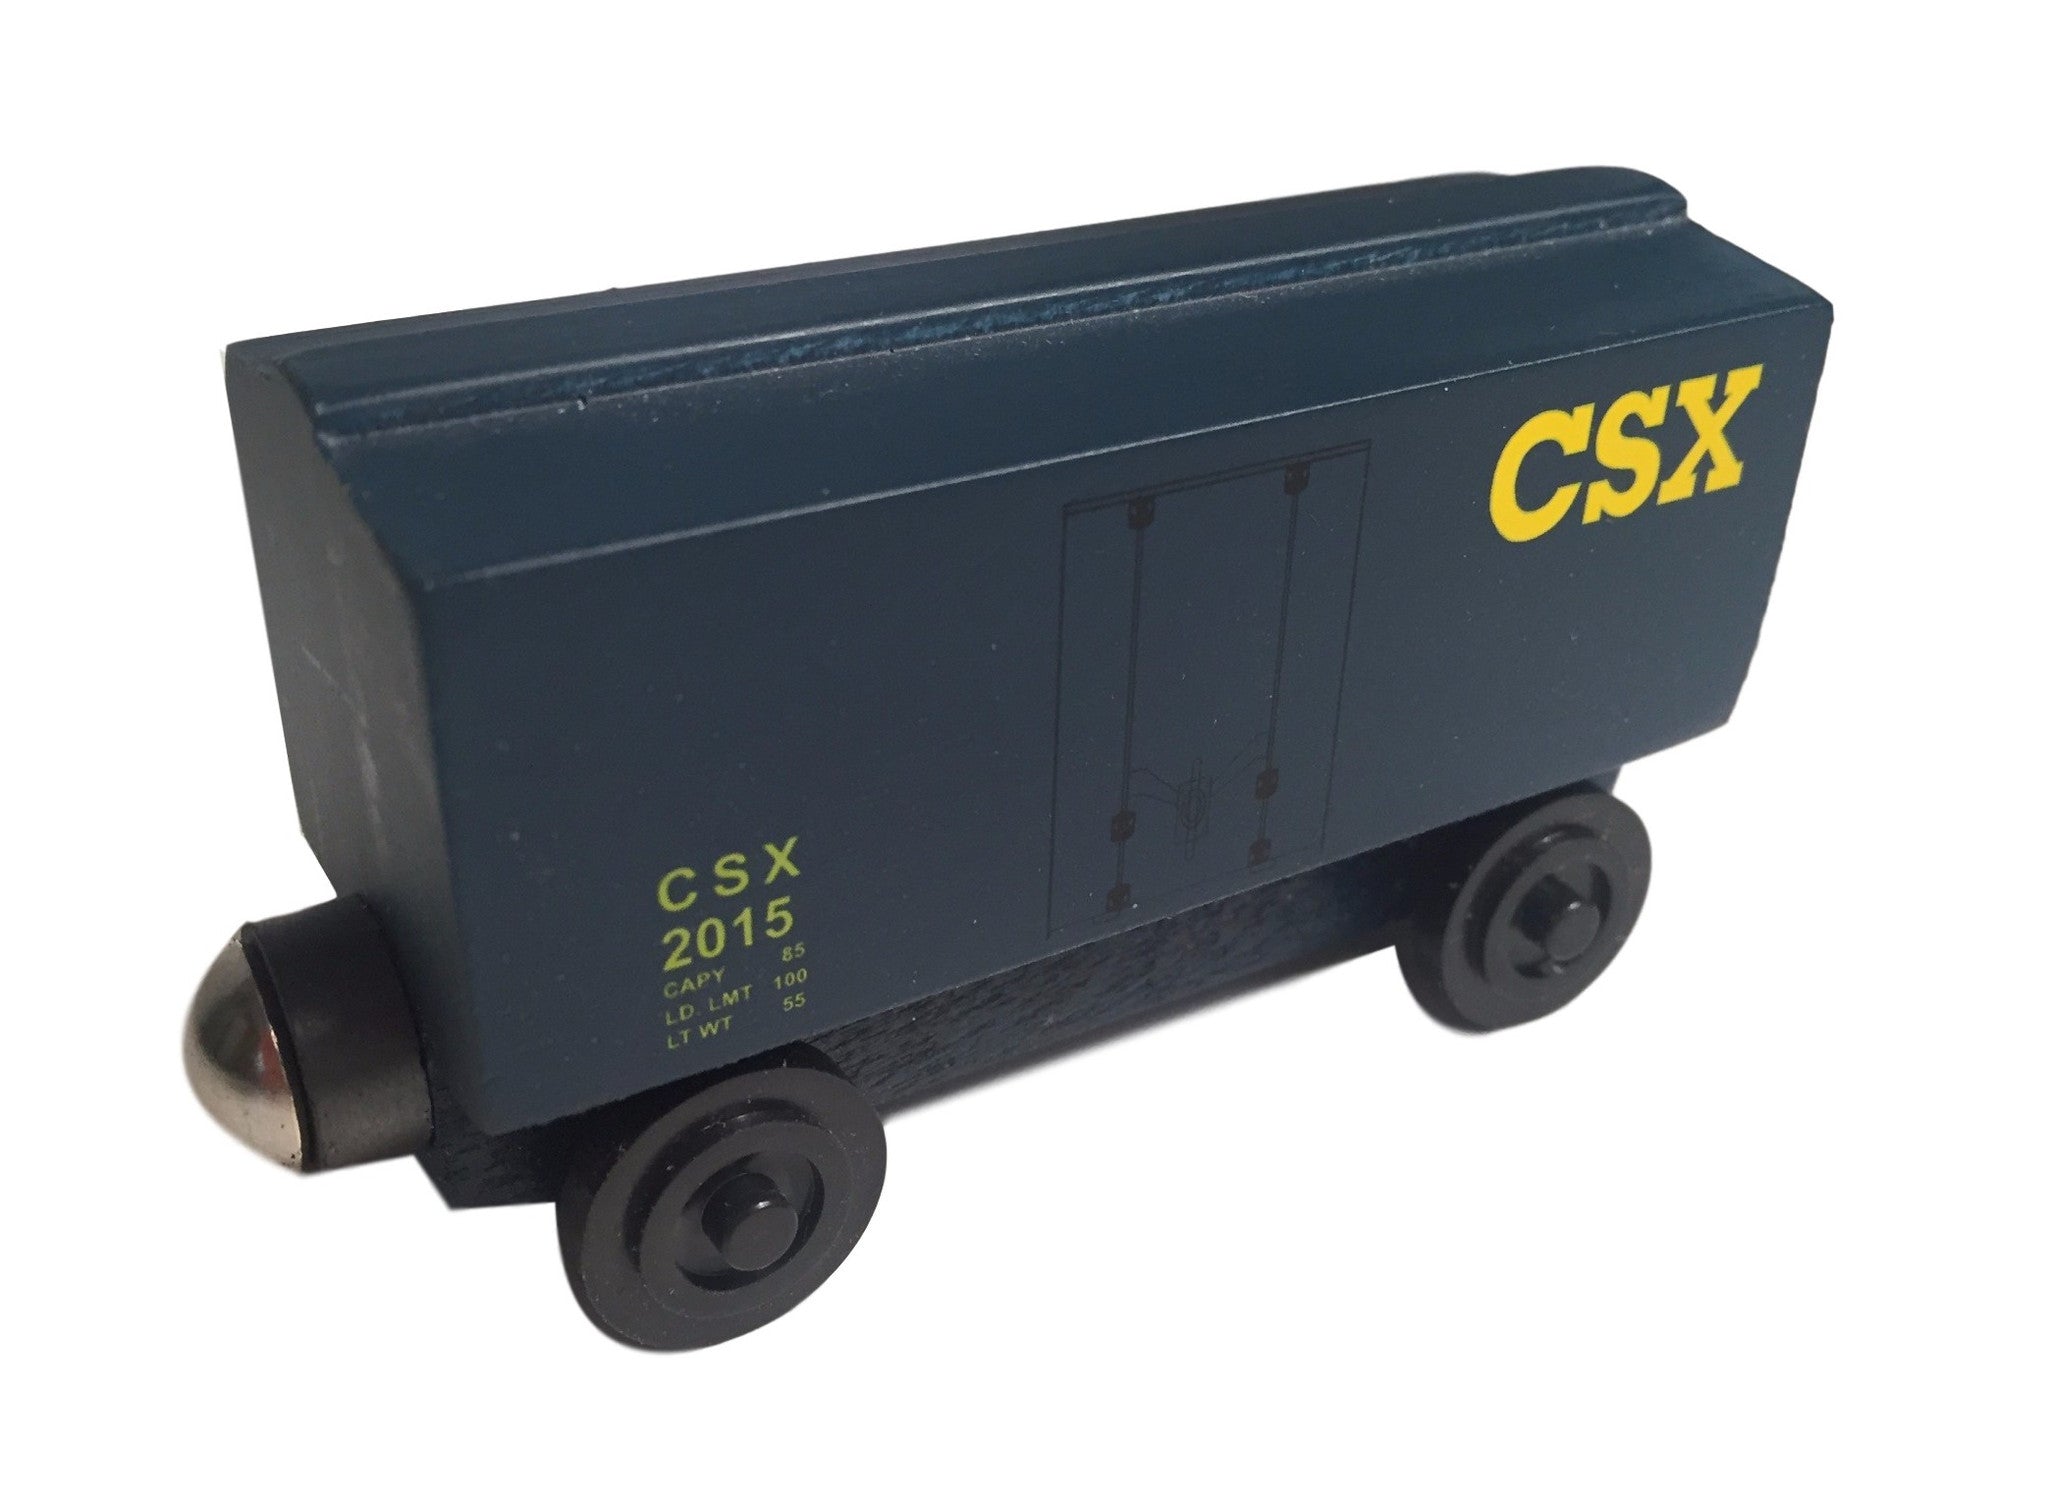 Whittle Shortline Railroad CSX Boxcar Wooden Toy Train